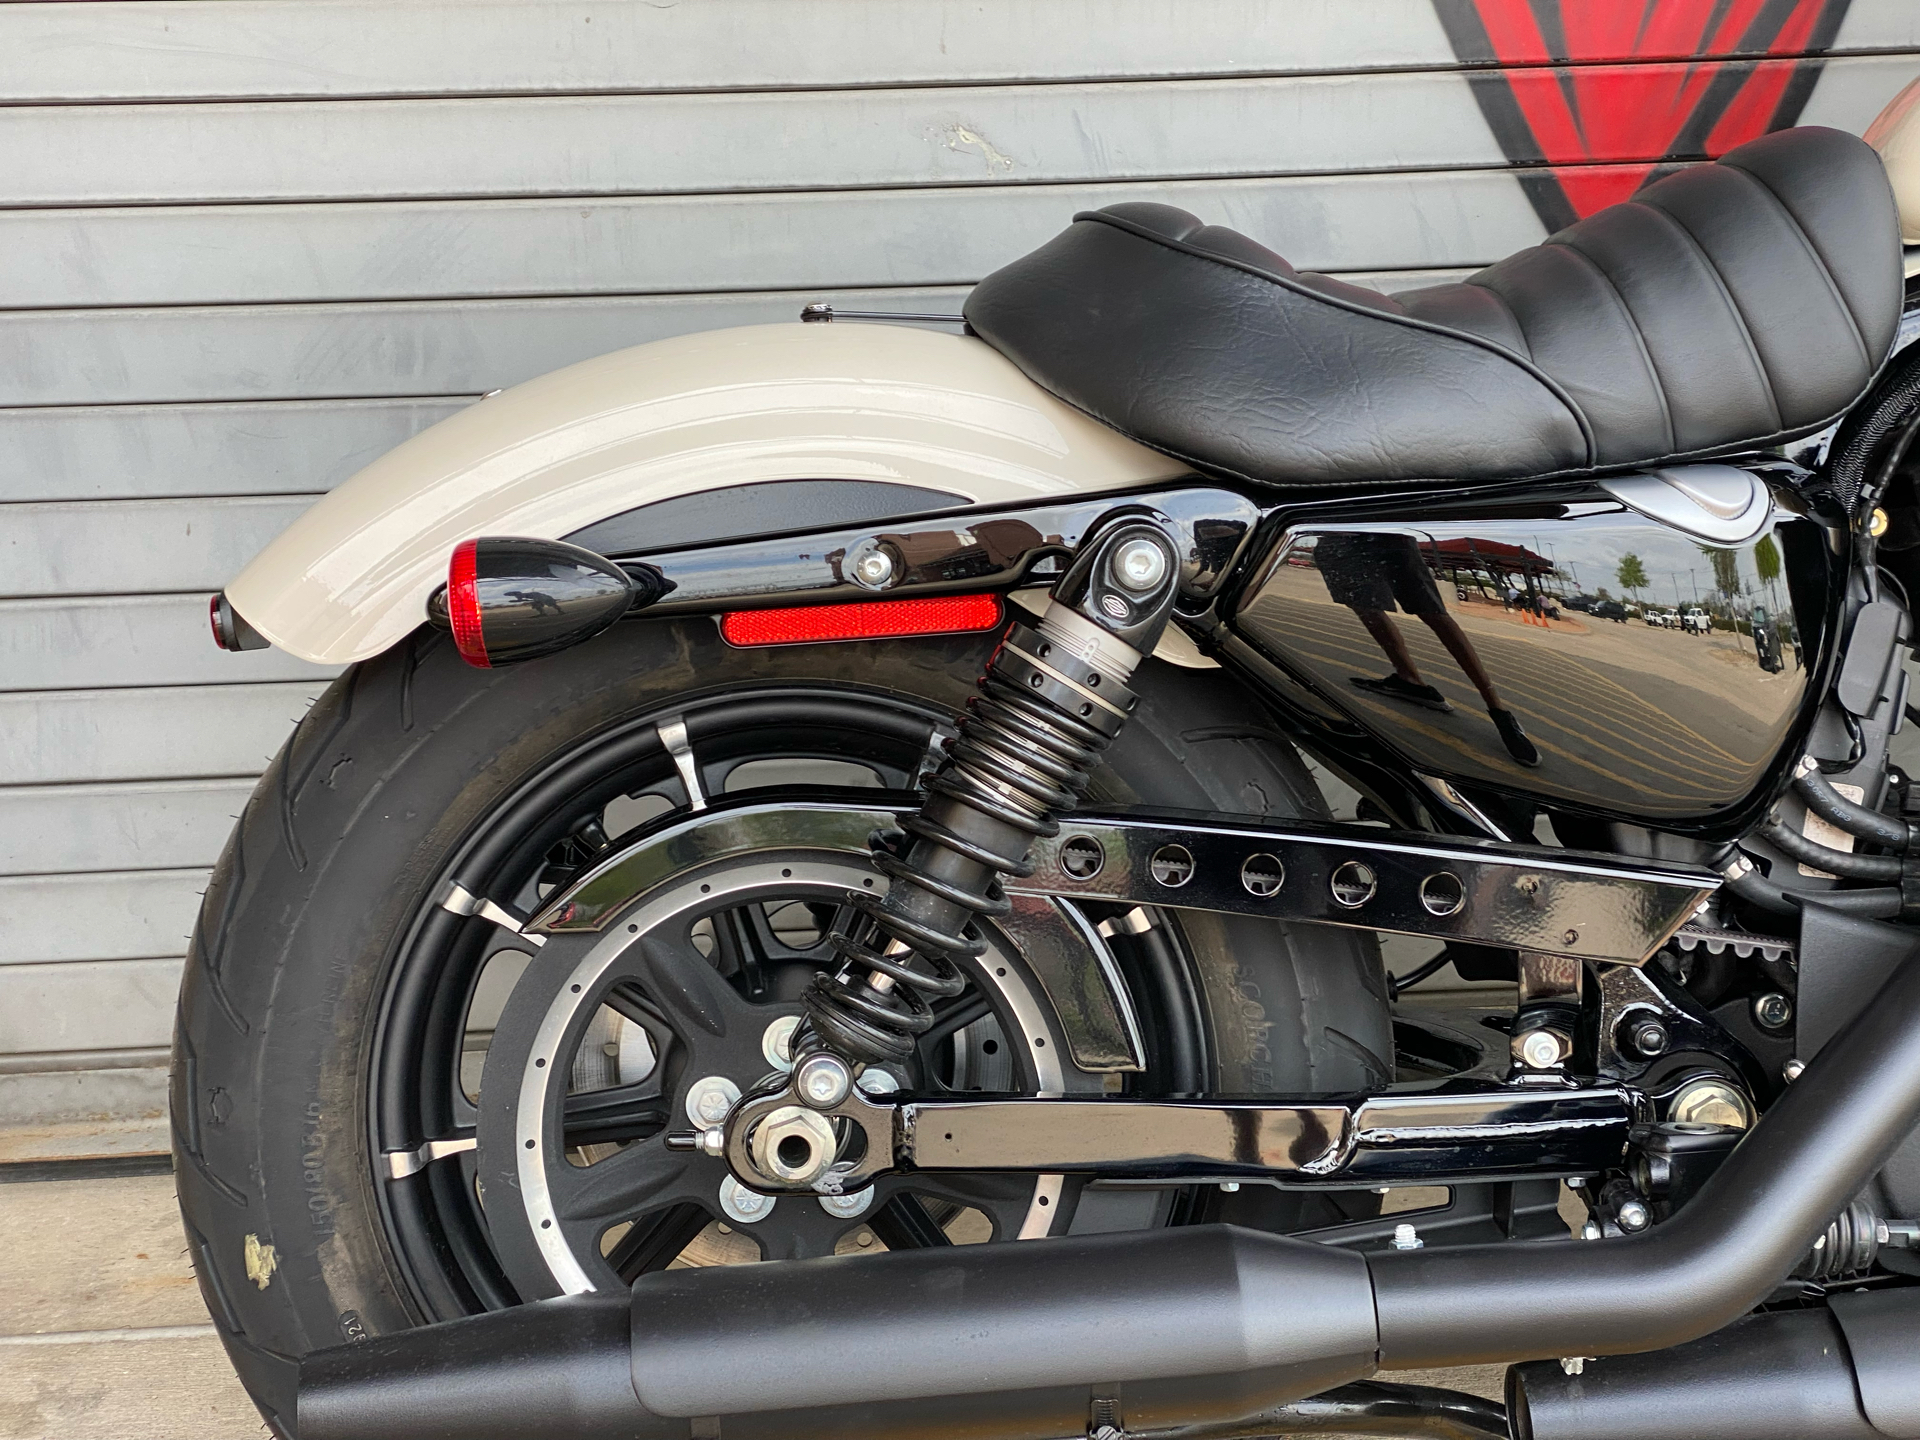 2022 Harley-Davidson Iron 883™ in Carrollton, Texas - Photo 8